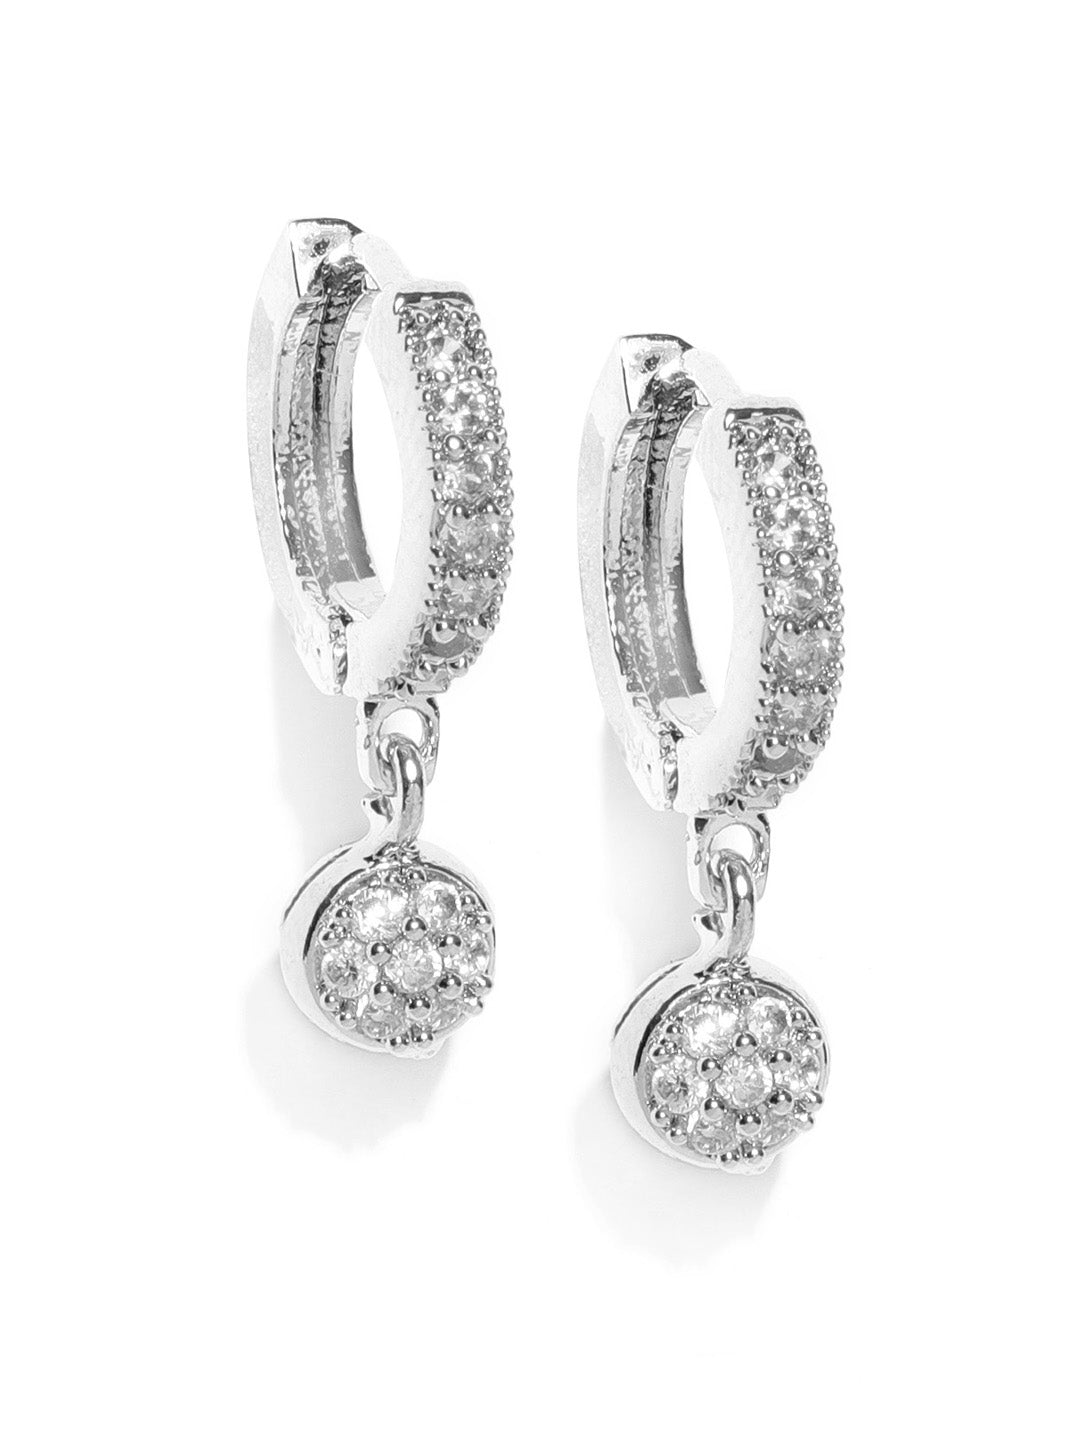 Silver Plated American Diamond Studded Small Bali Like Stud Earrings